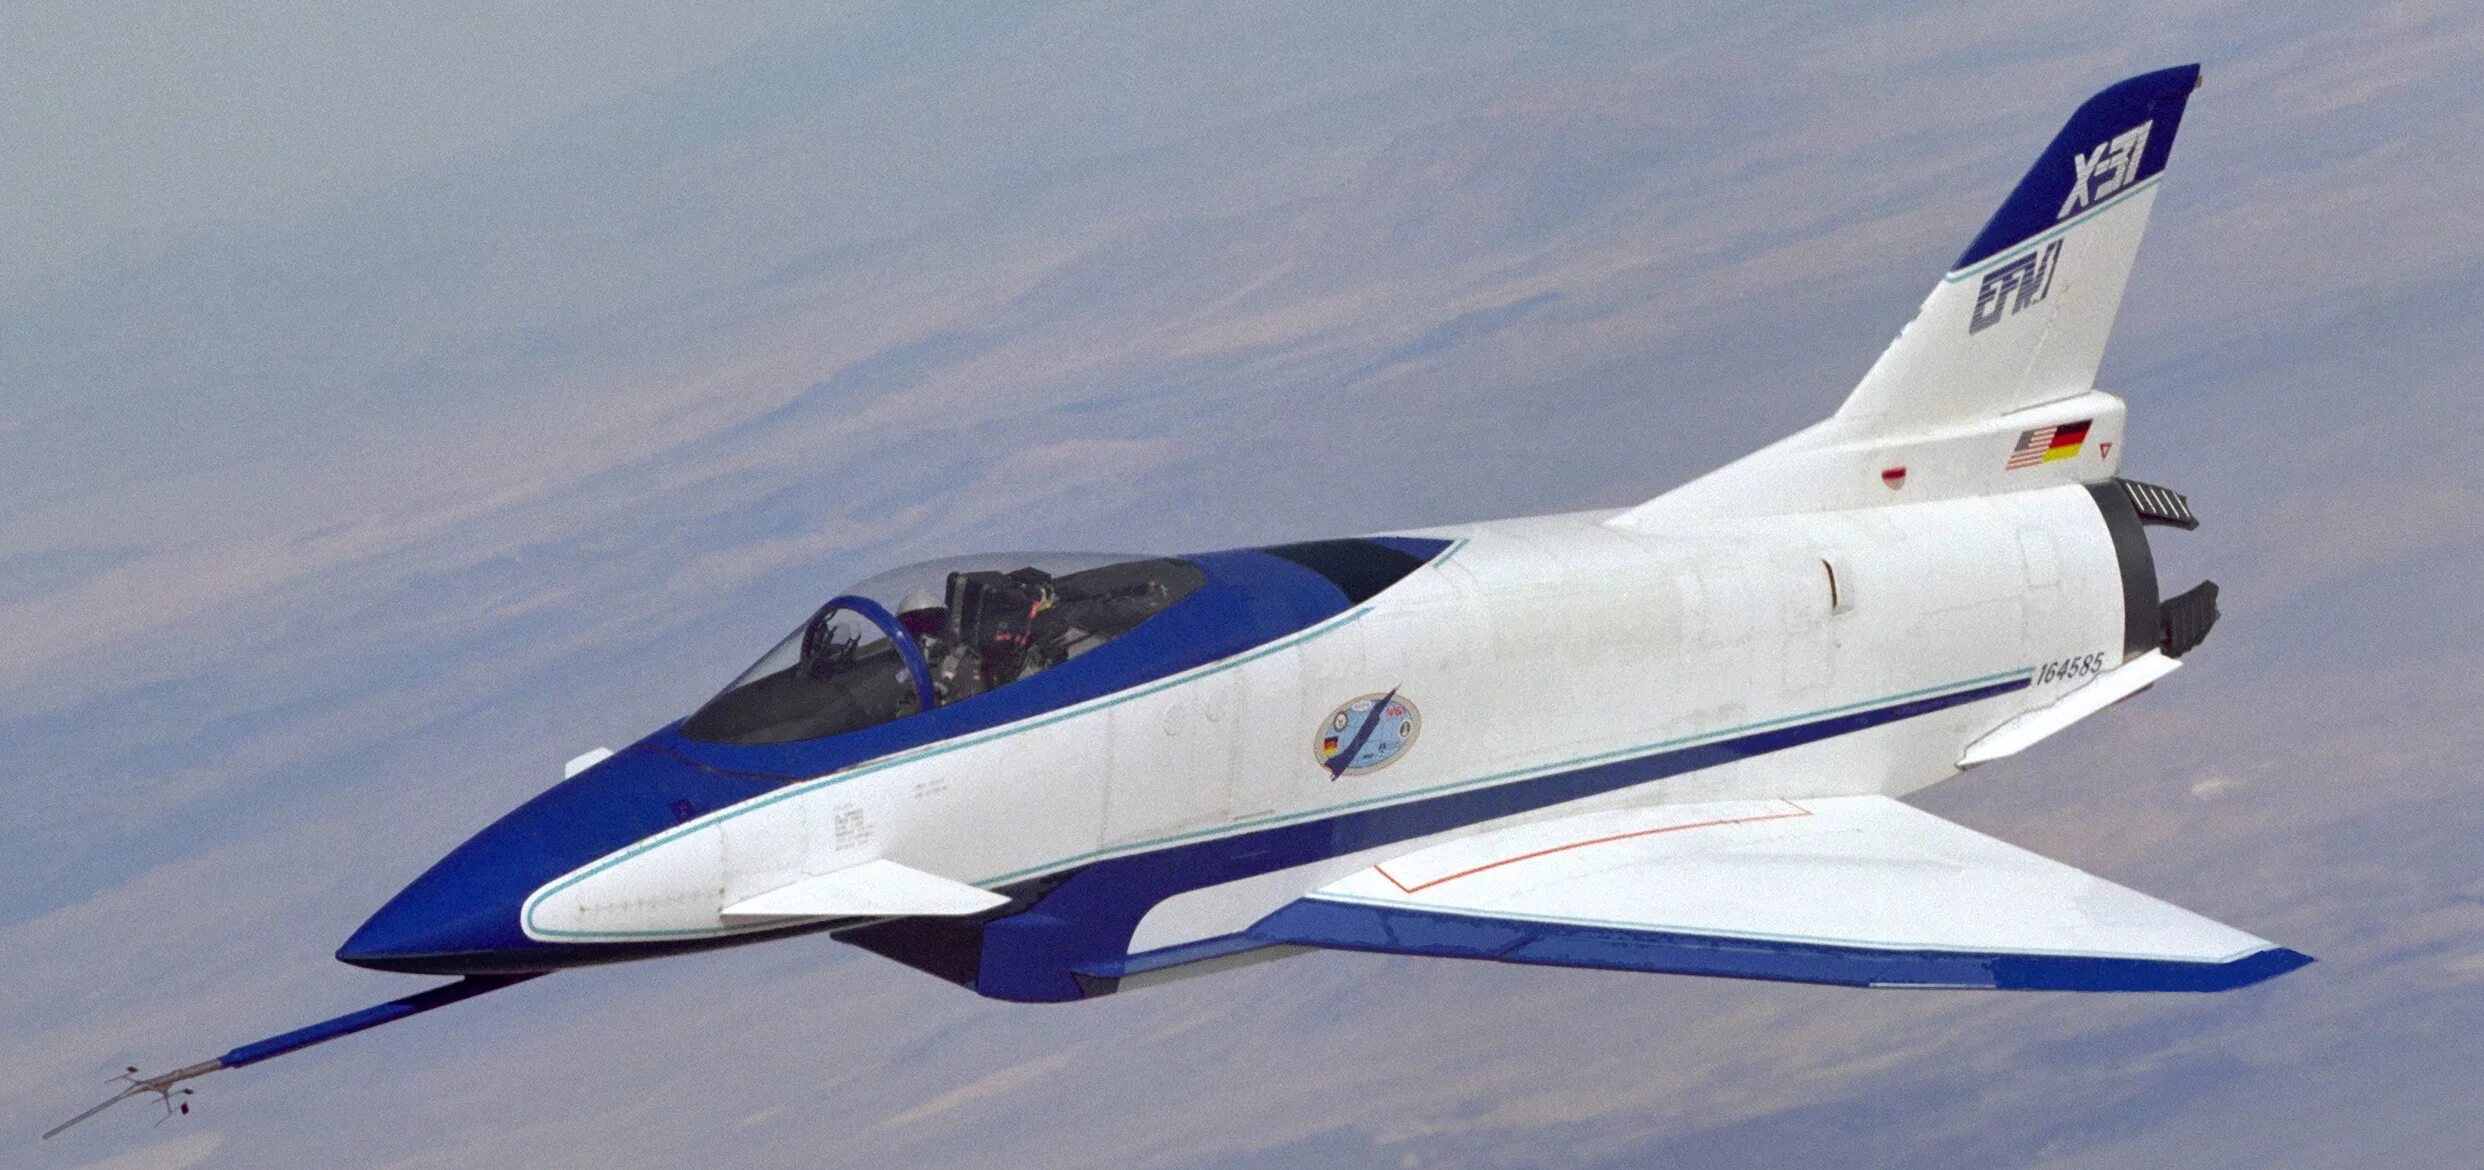 1 5 x 31. Rockwell x-31. MBB X-31. Экспериментальный самолет x-31a. Raf x 31 самолет.